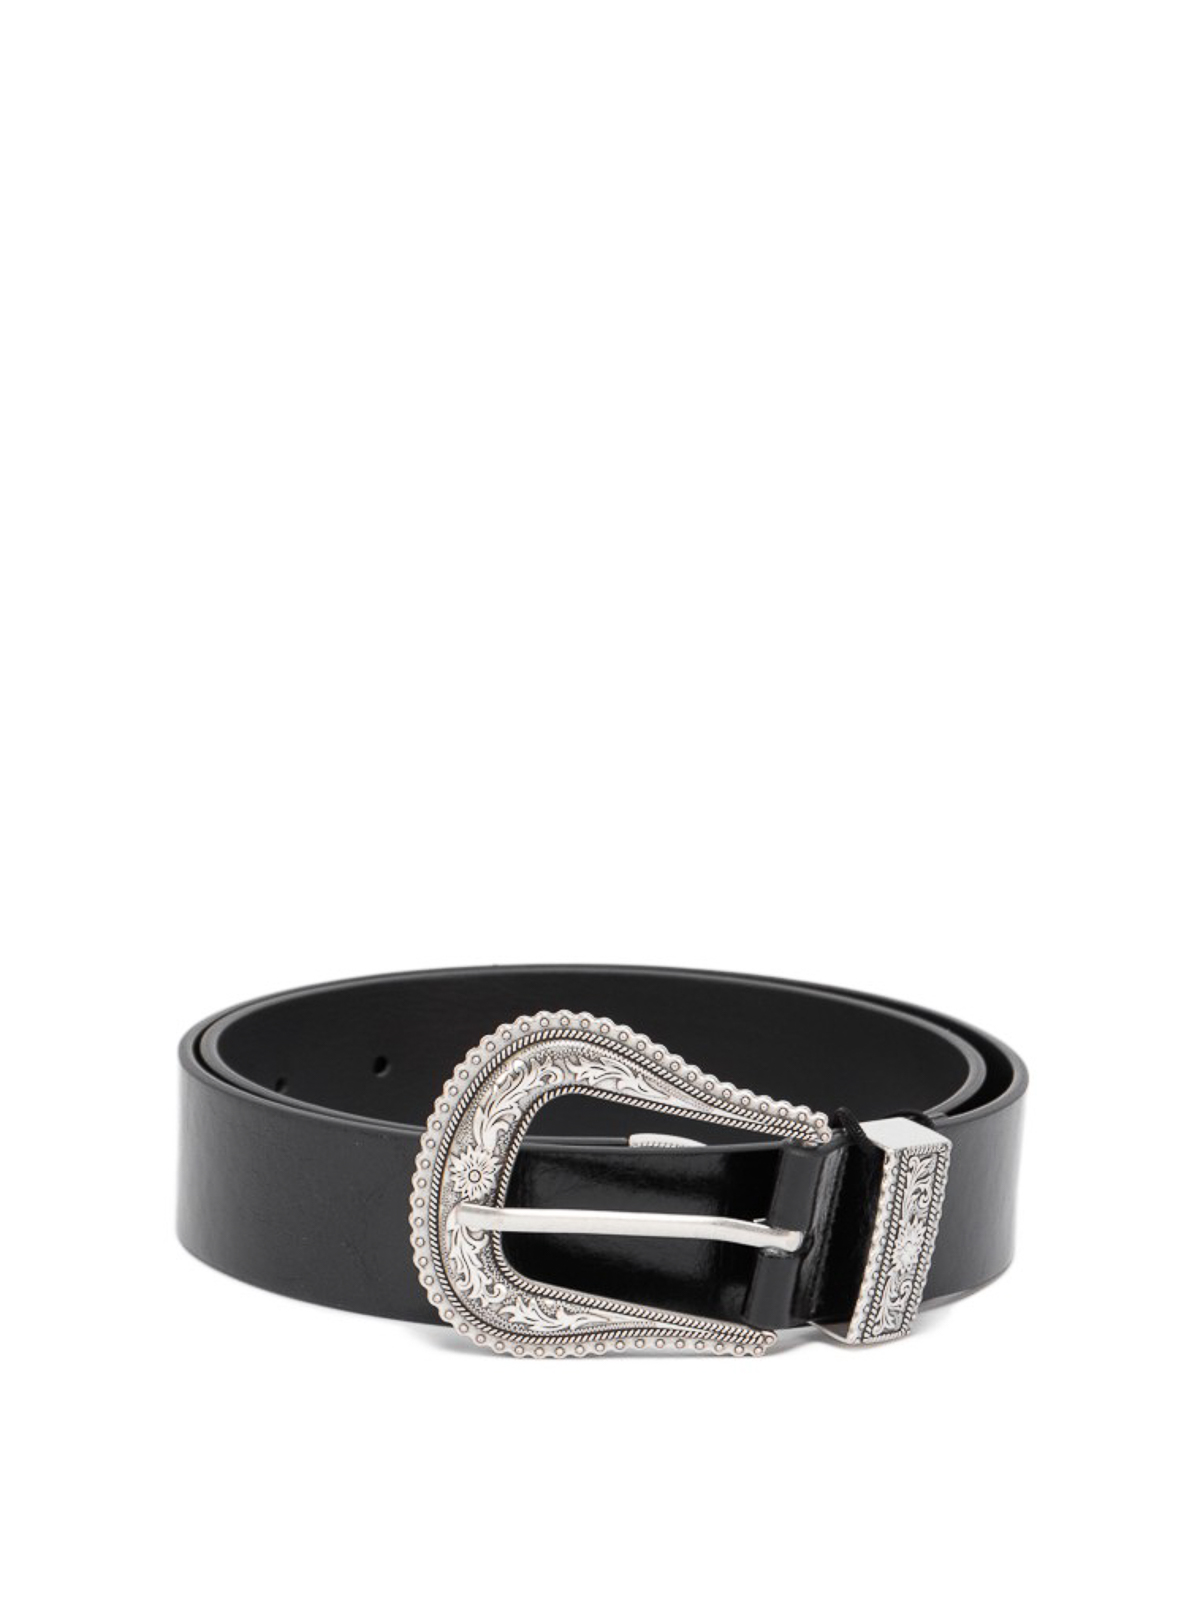 Belts Twinset - Shiny leather belt - 221TA401B00006 | Shop online at iKRIX